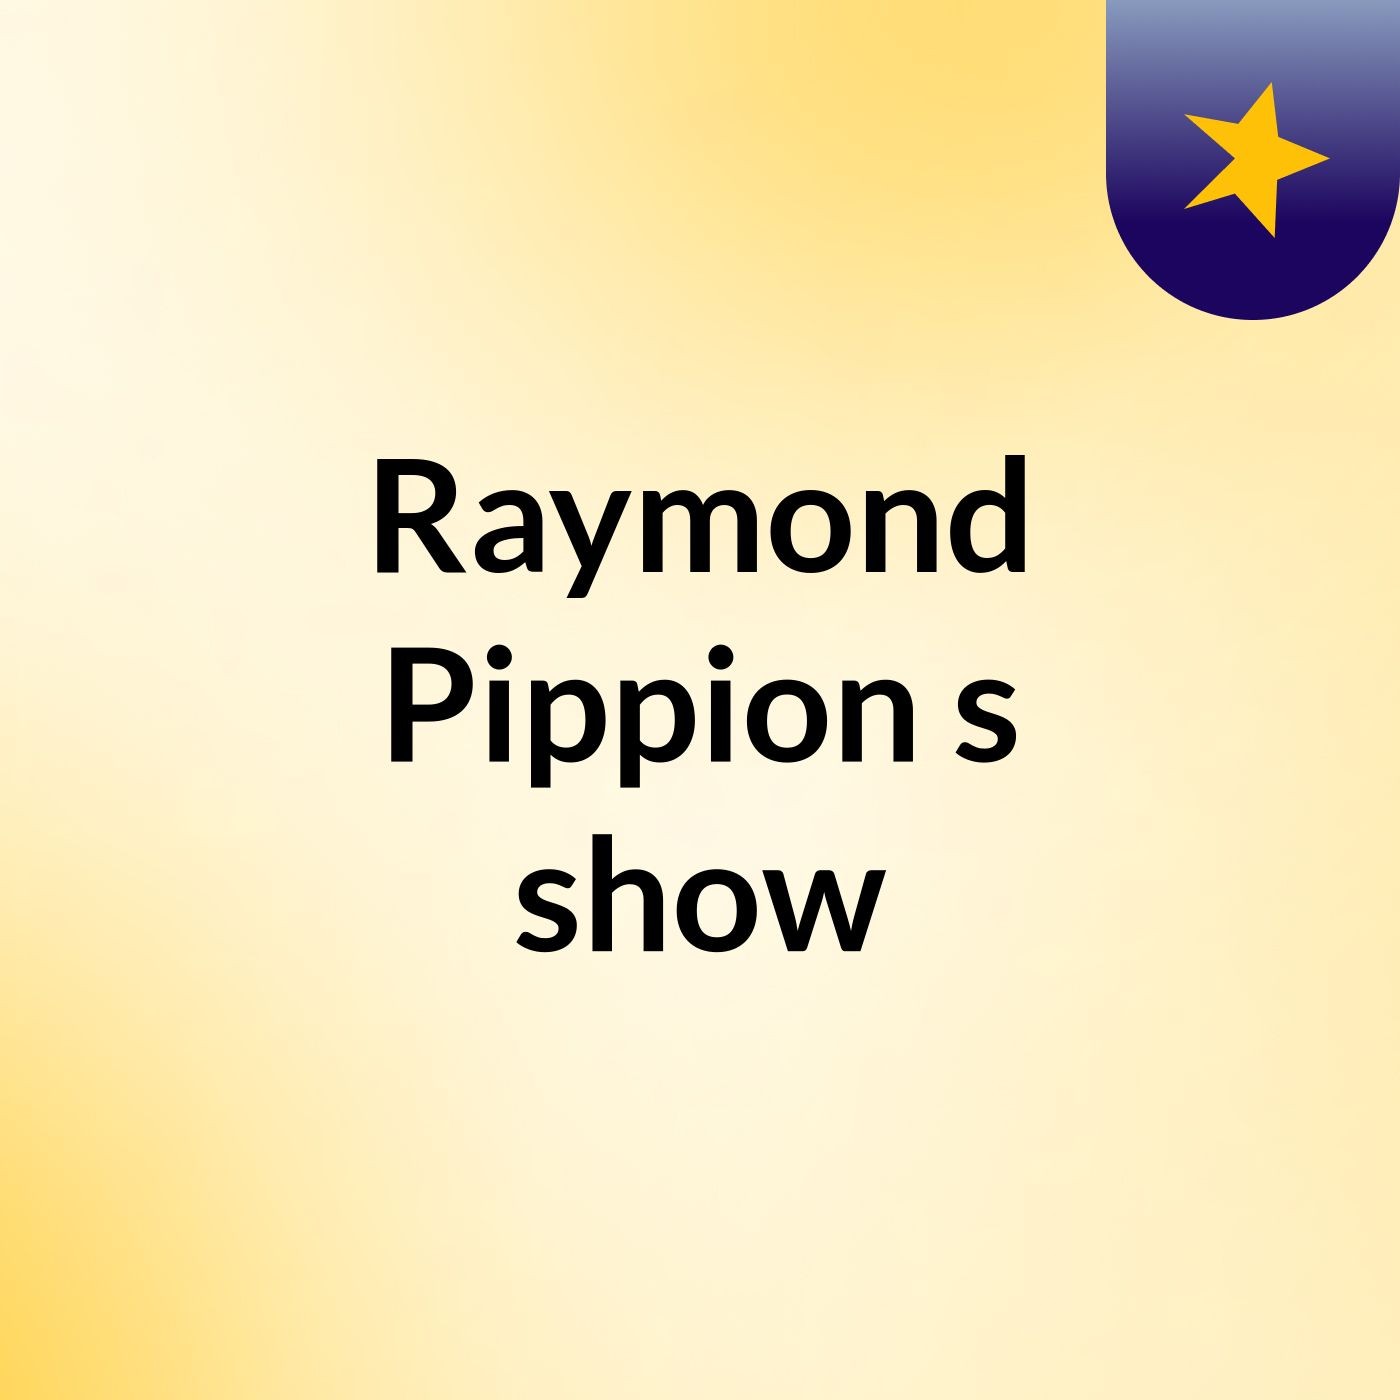 Episode 6 - Raymond Pippion's show